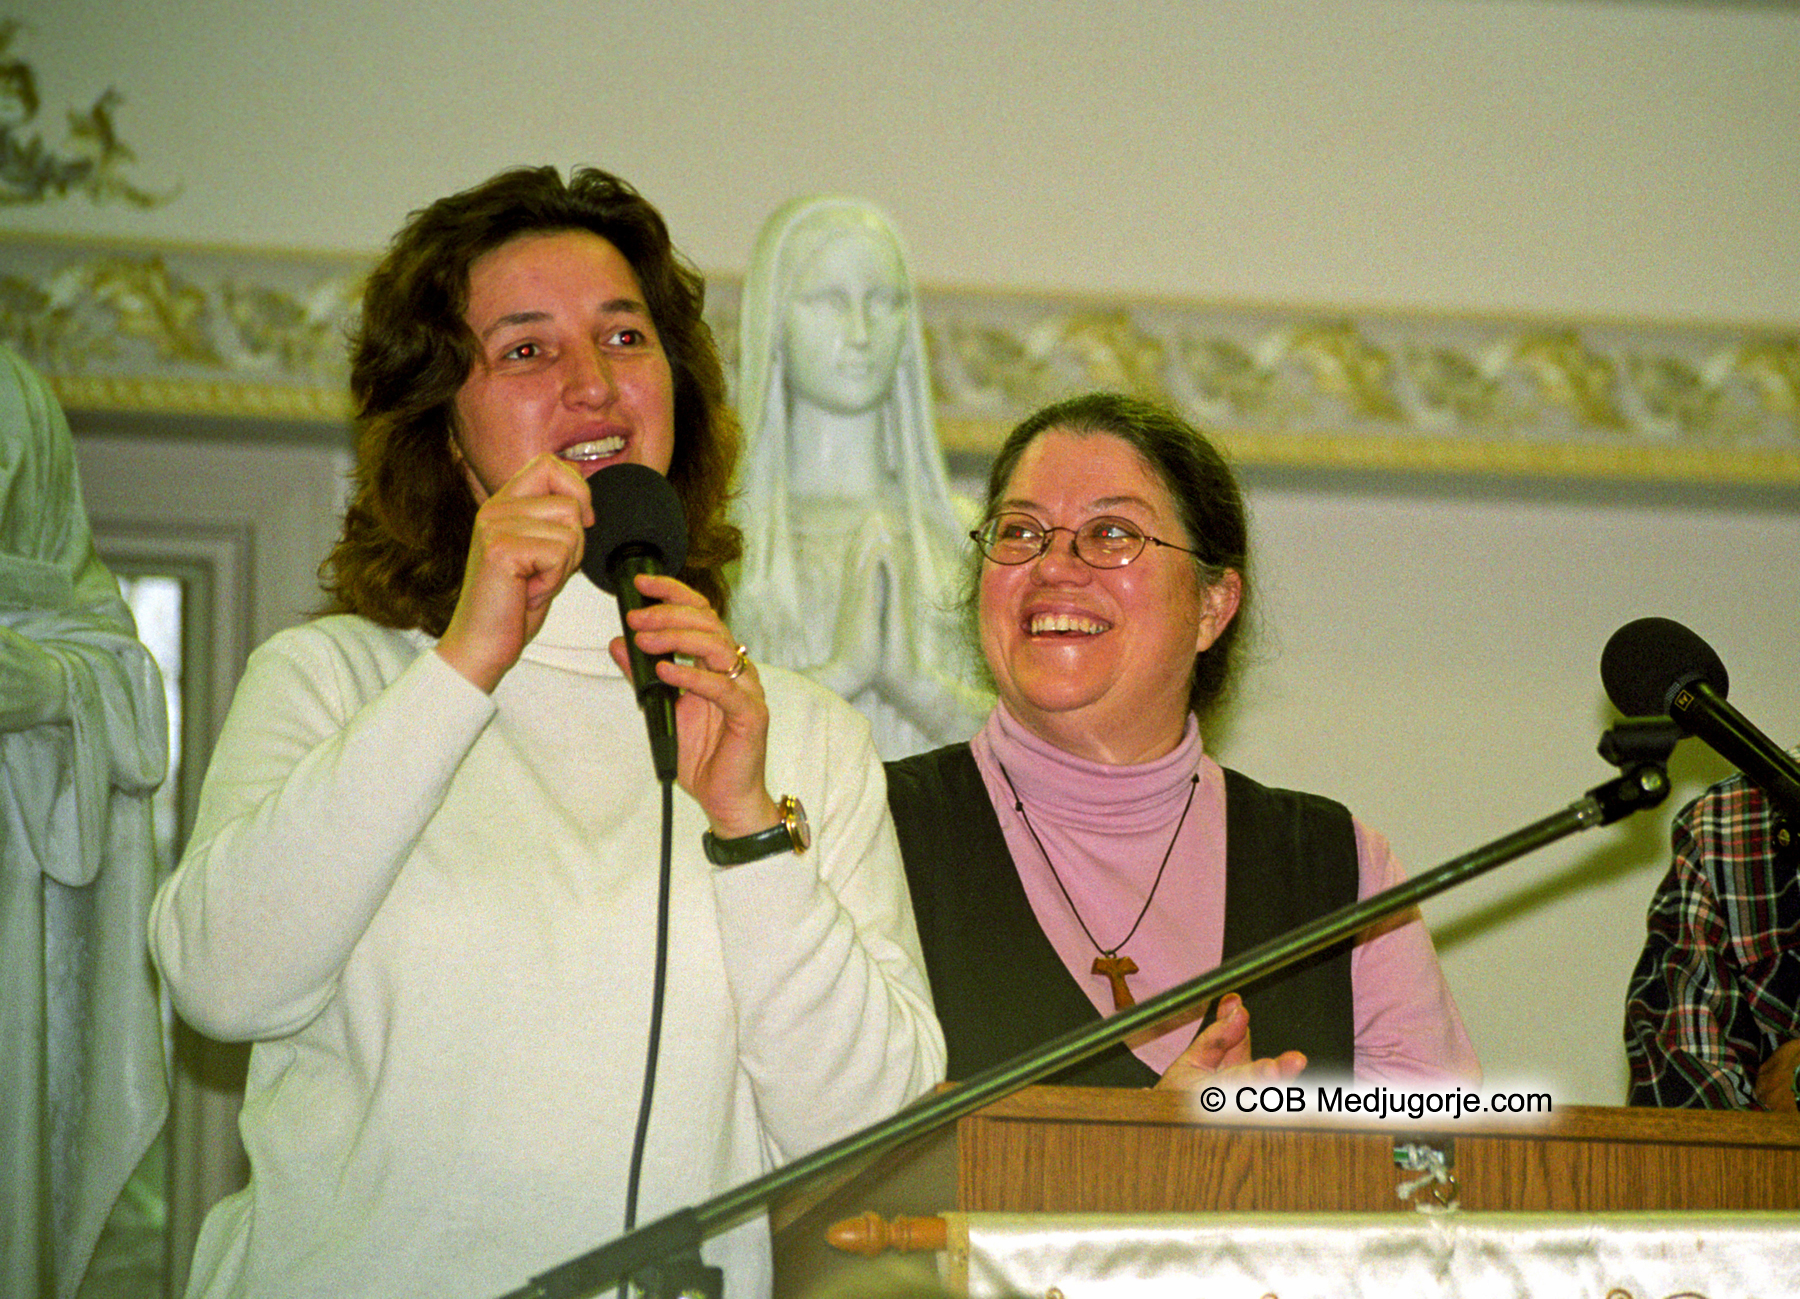 Marija speaking to the Crowds at Caritas 2001